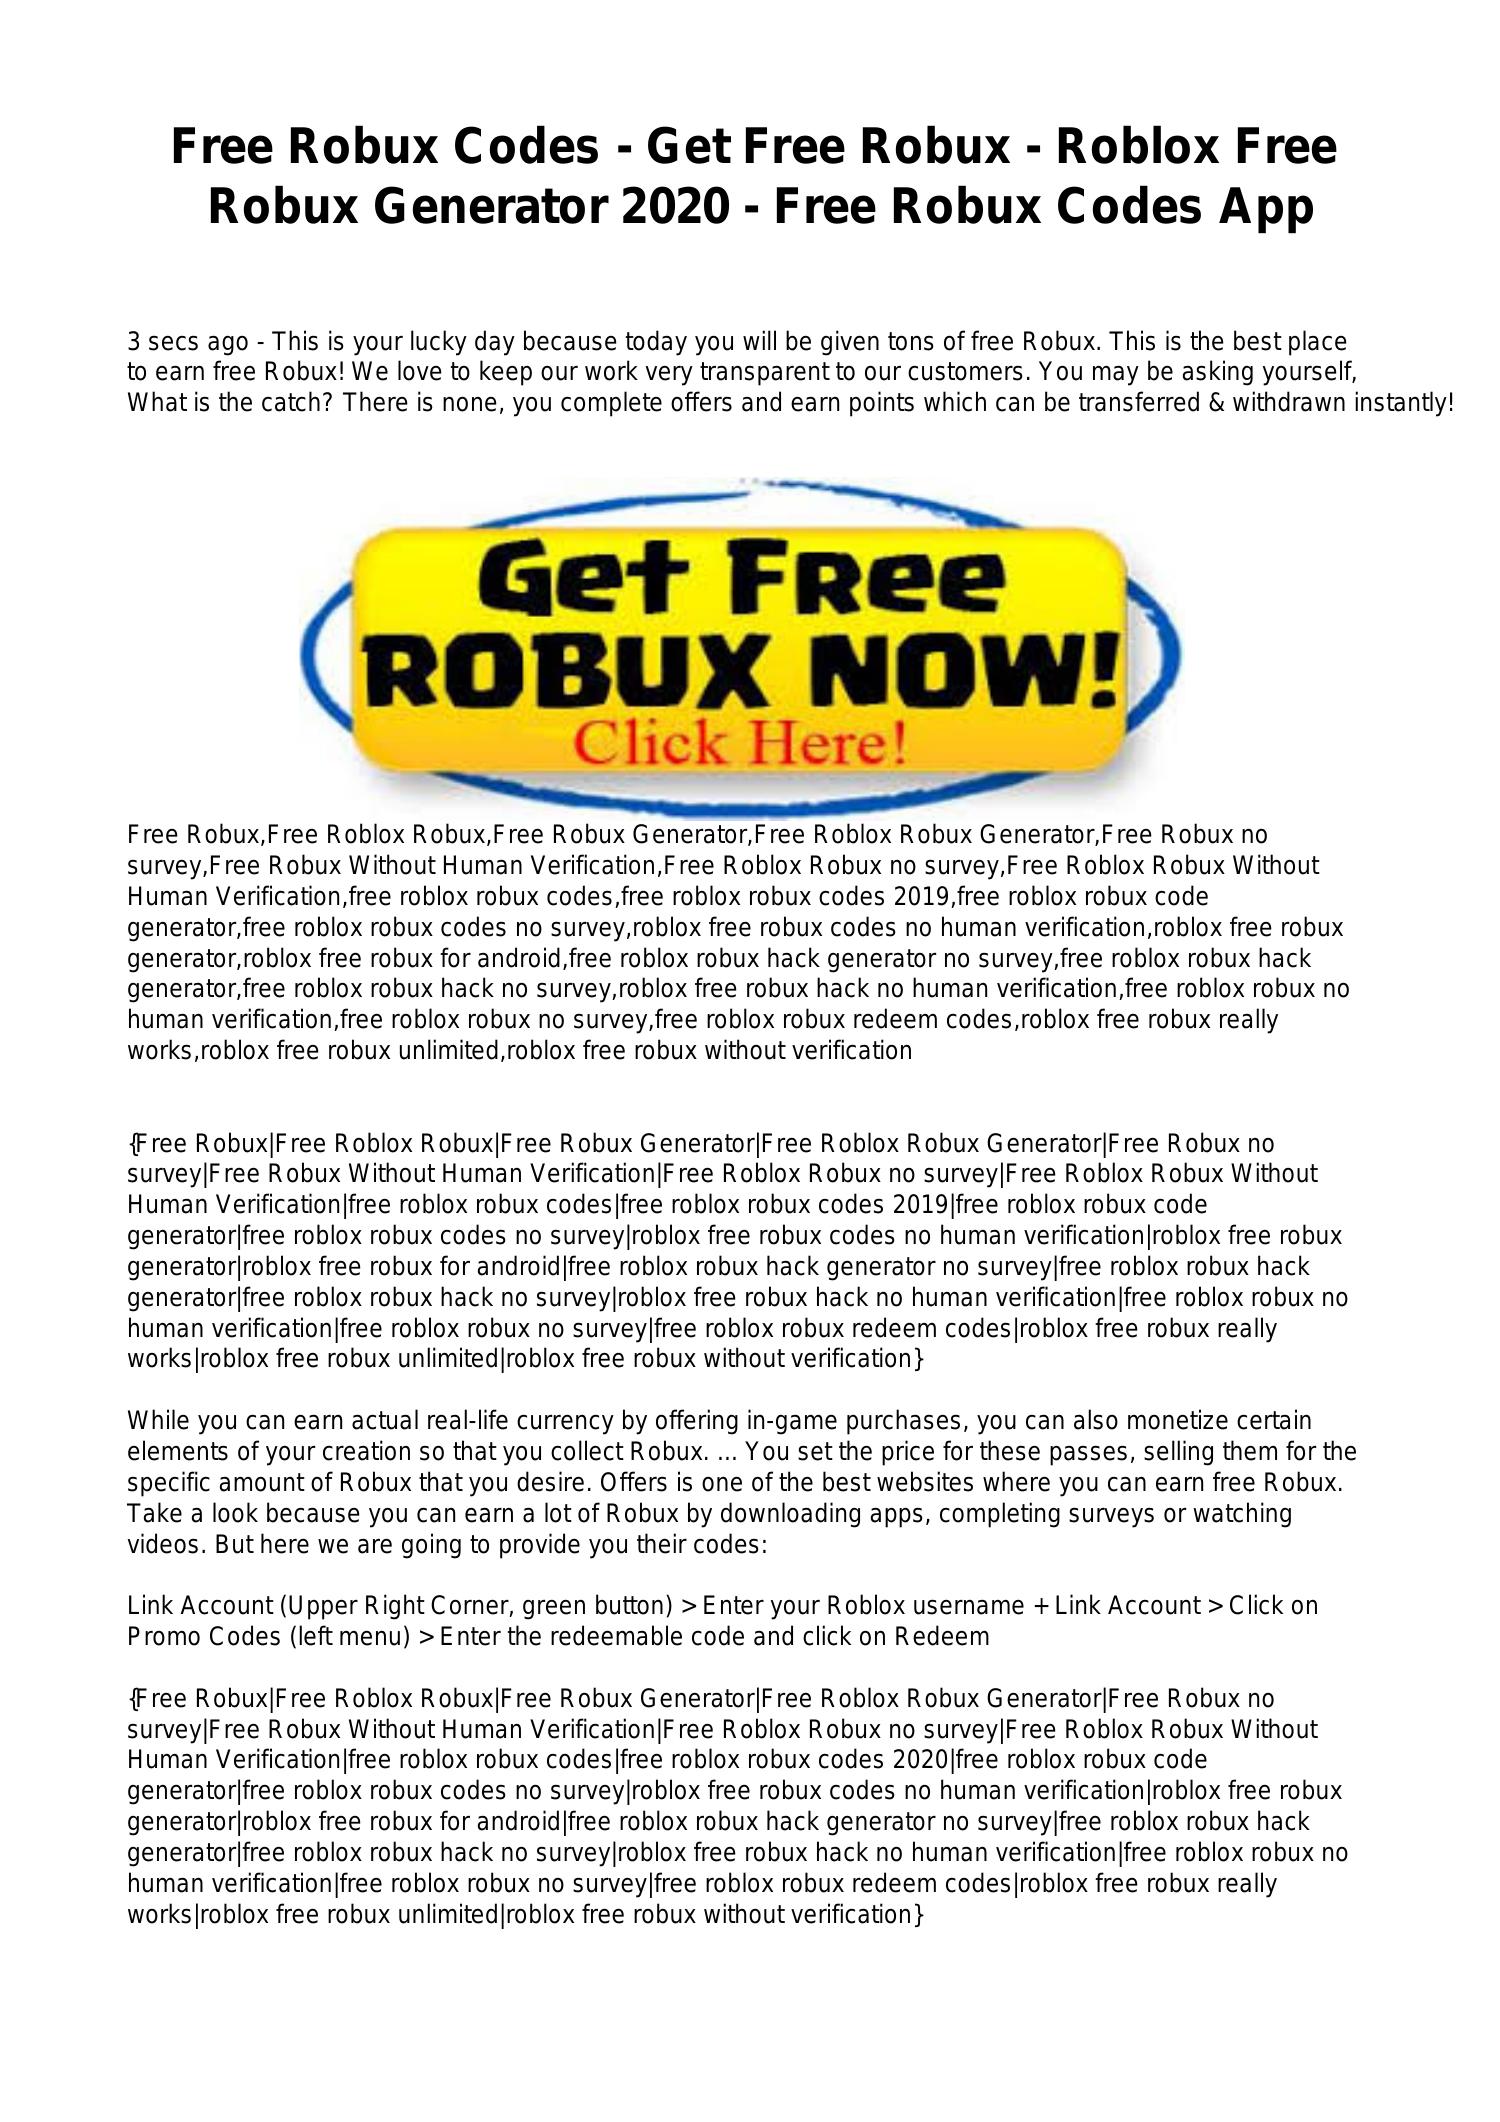 Free Robux Codes Get Free Robux Roblox Free Robux Generator